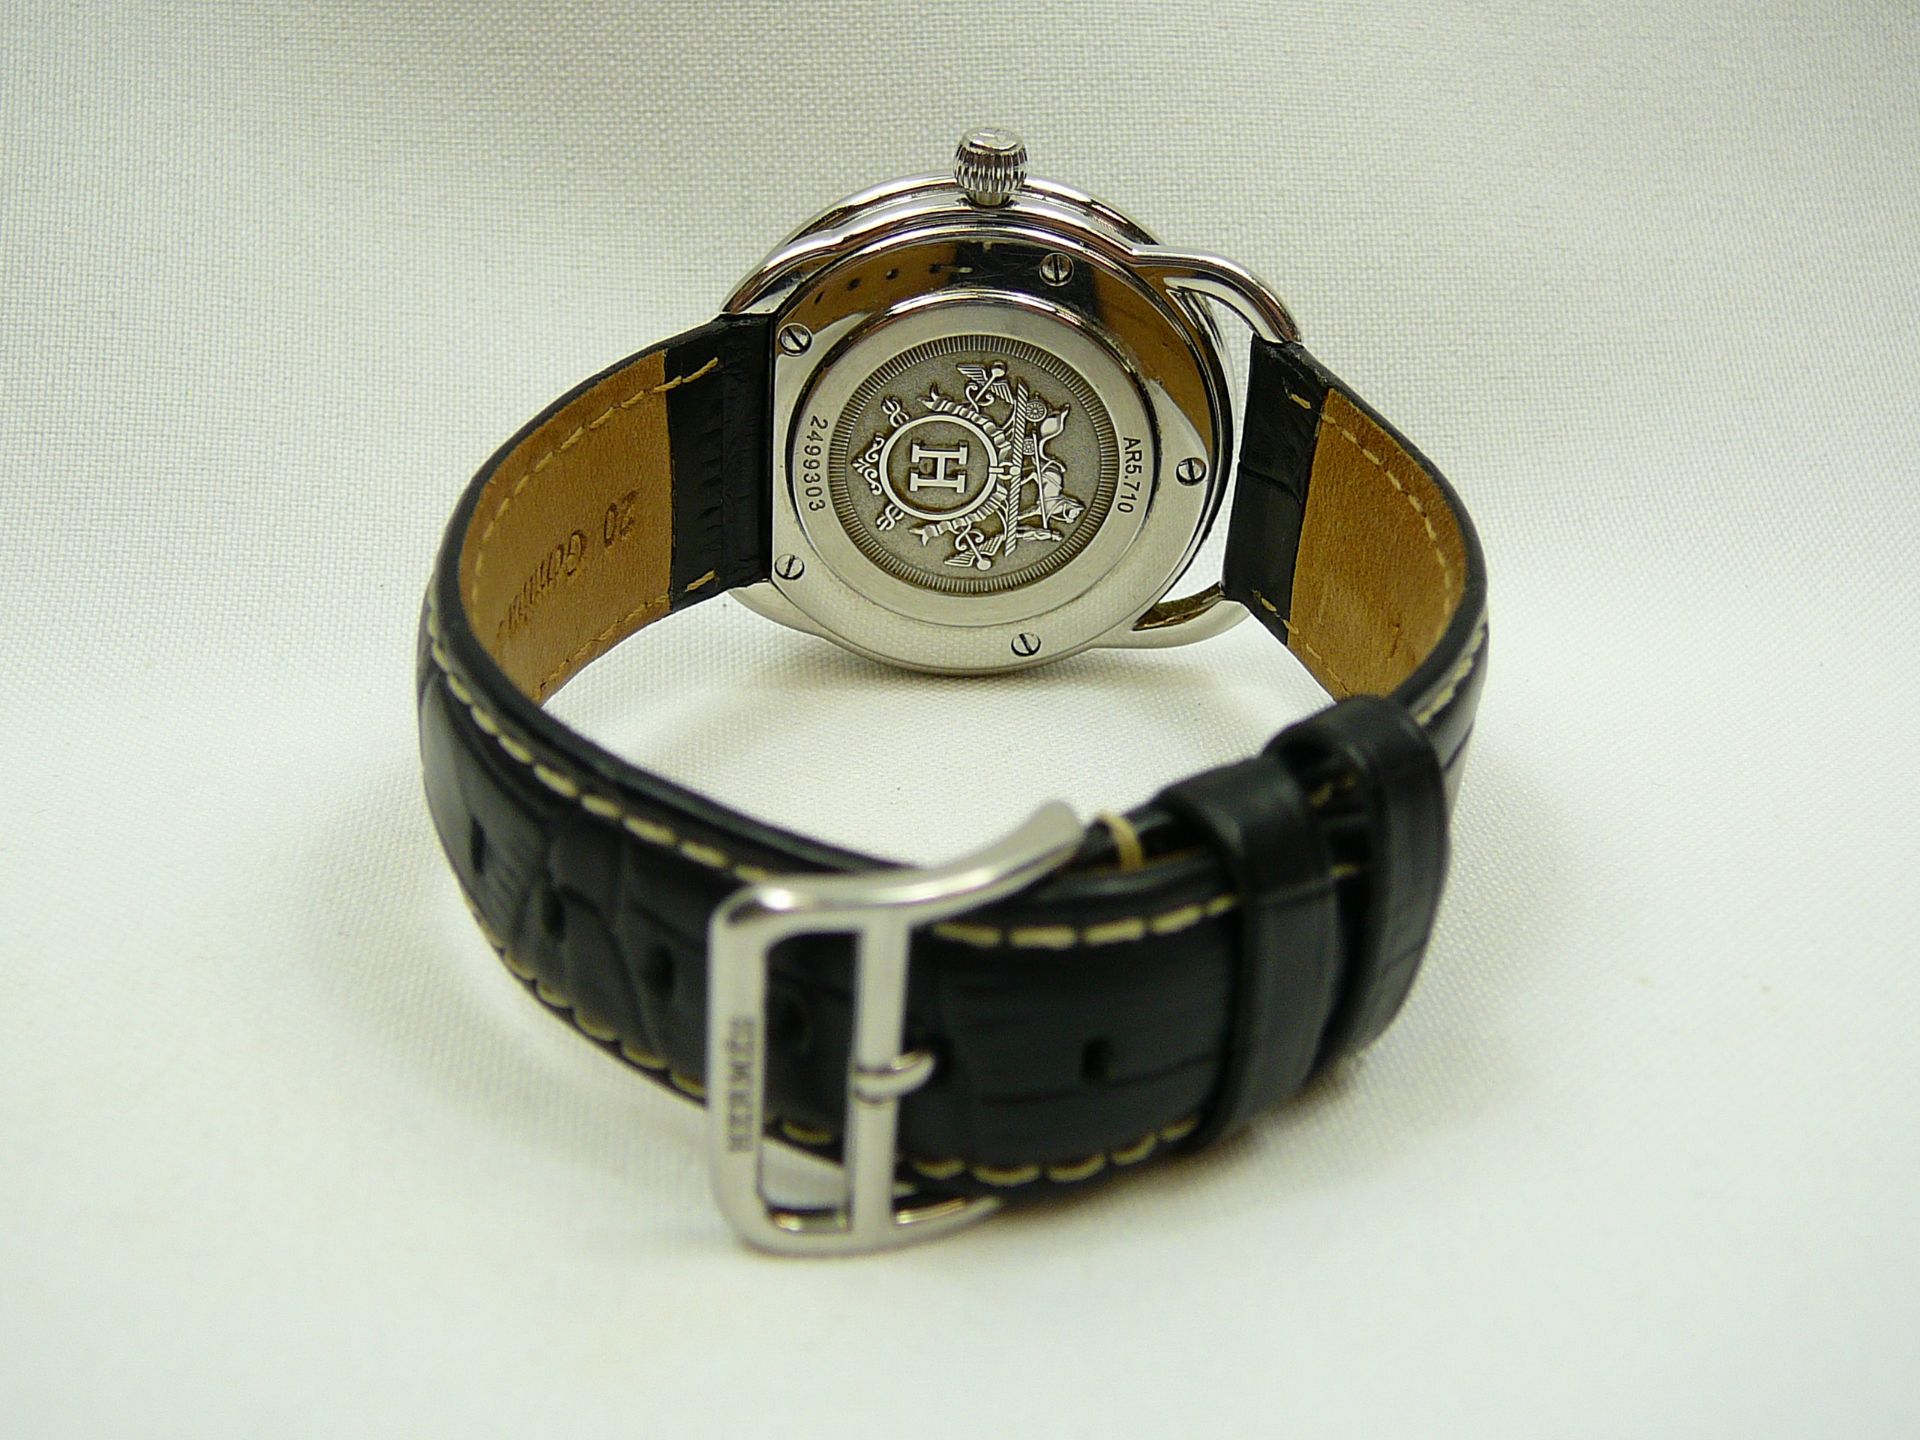 Gents Hermes Wristwatch - Image 3 of 3